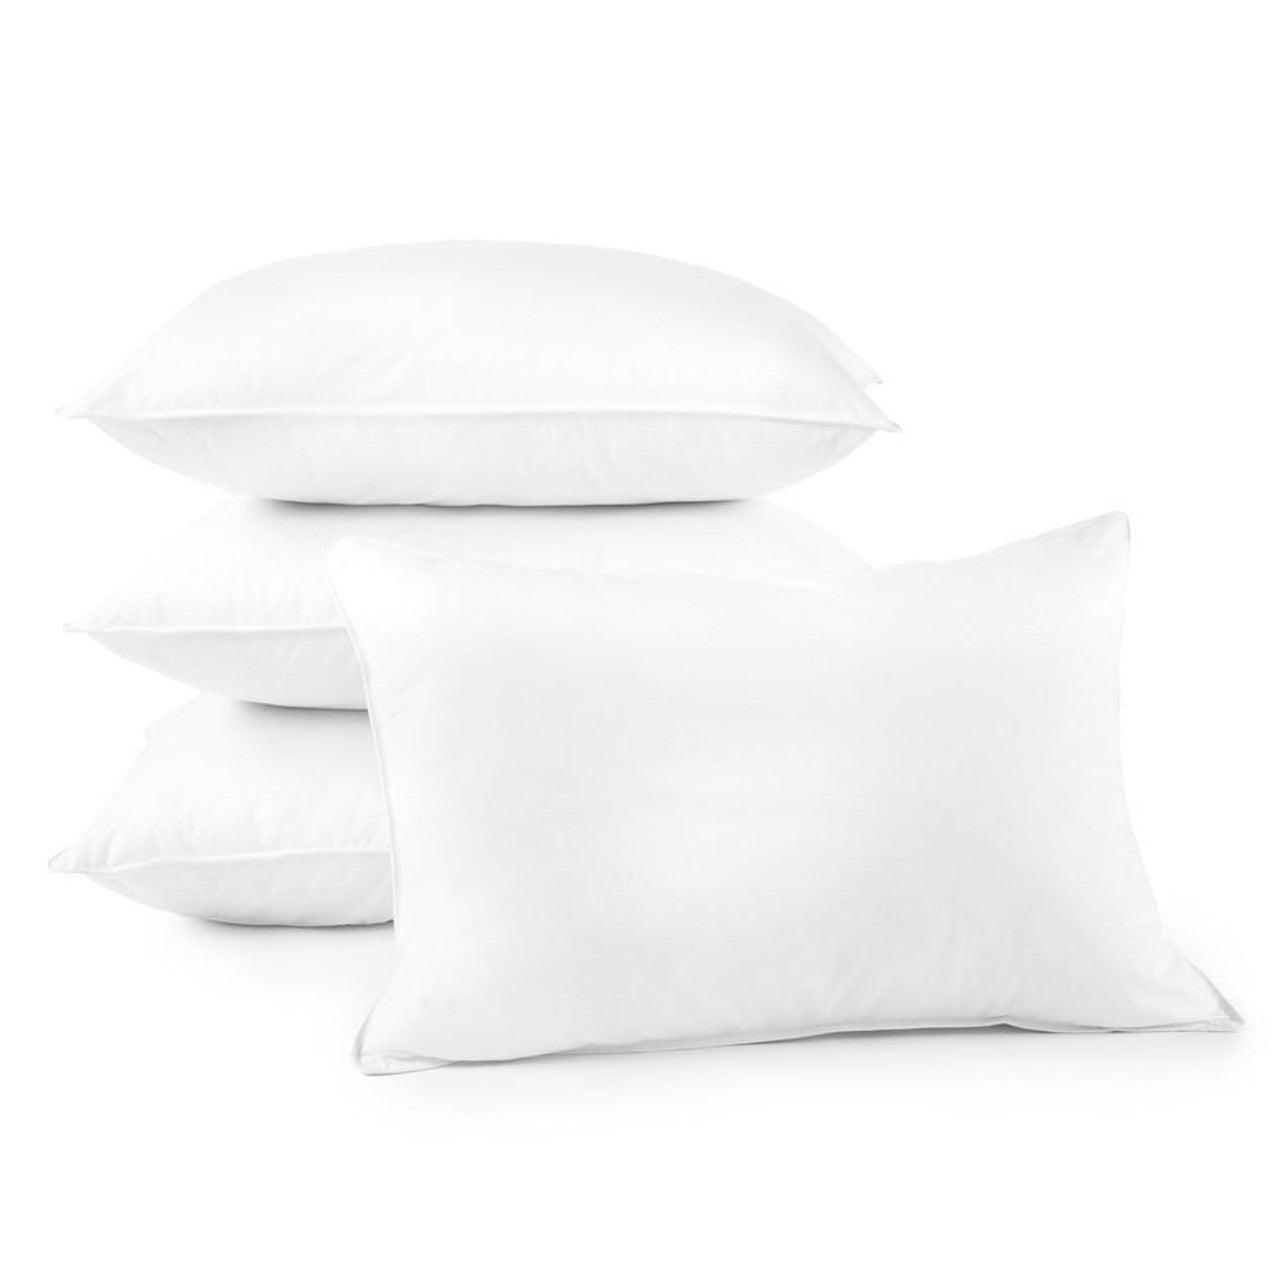 DOWNLITE/Pillow